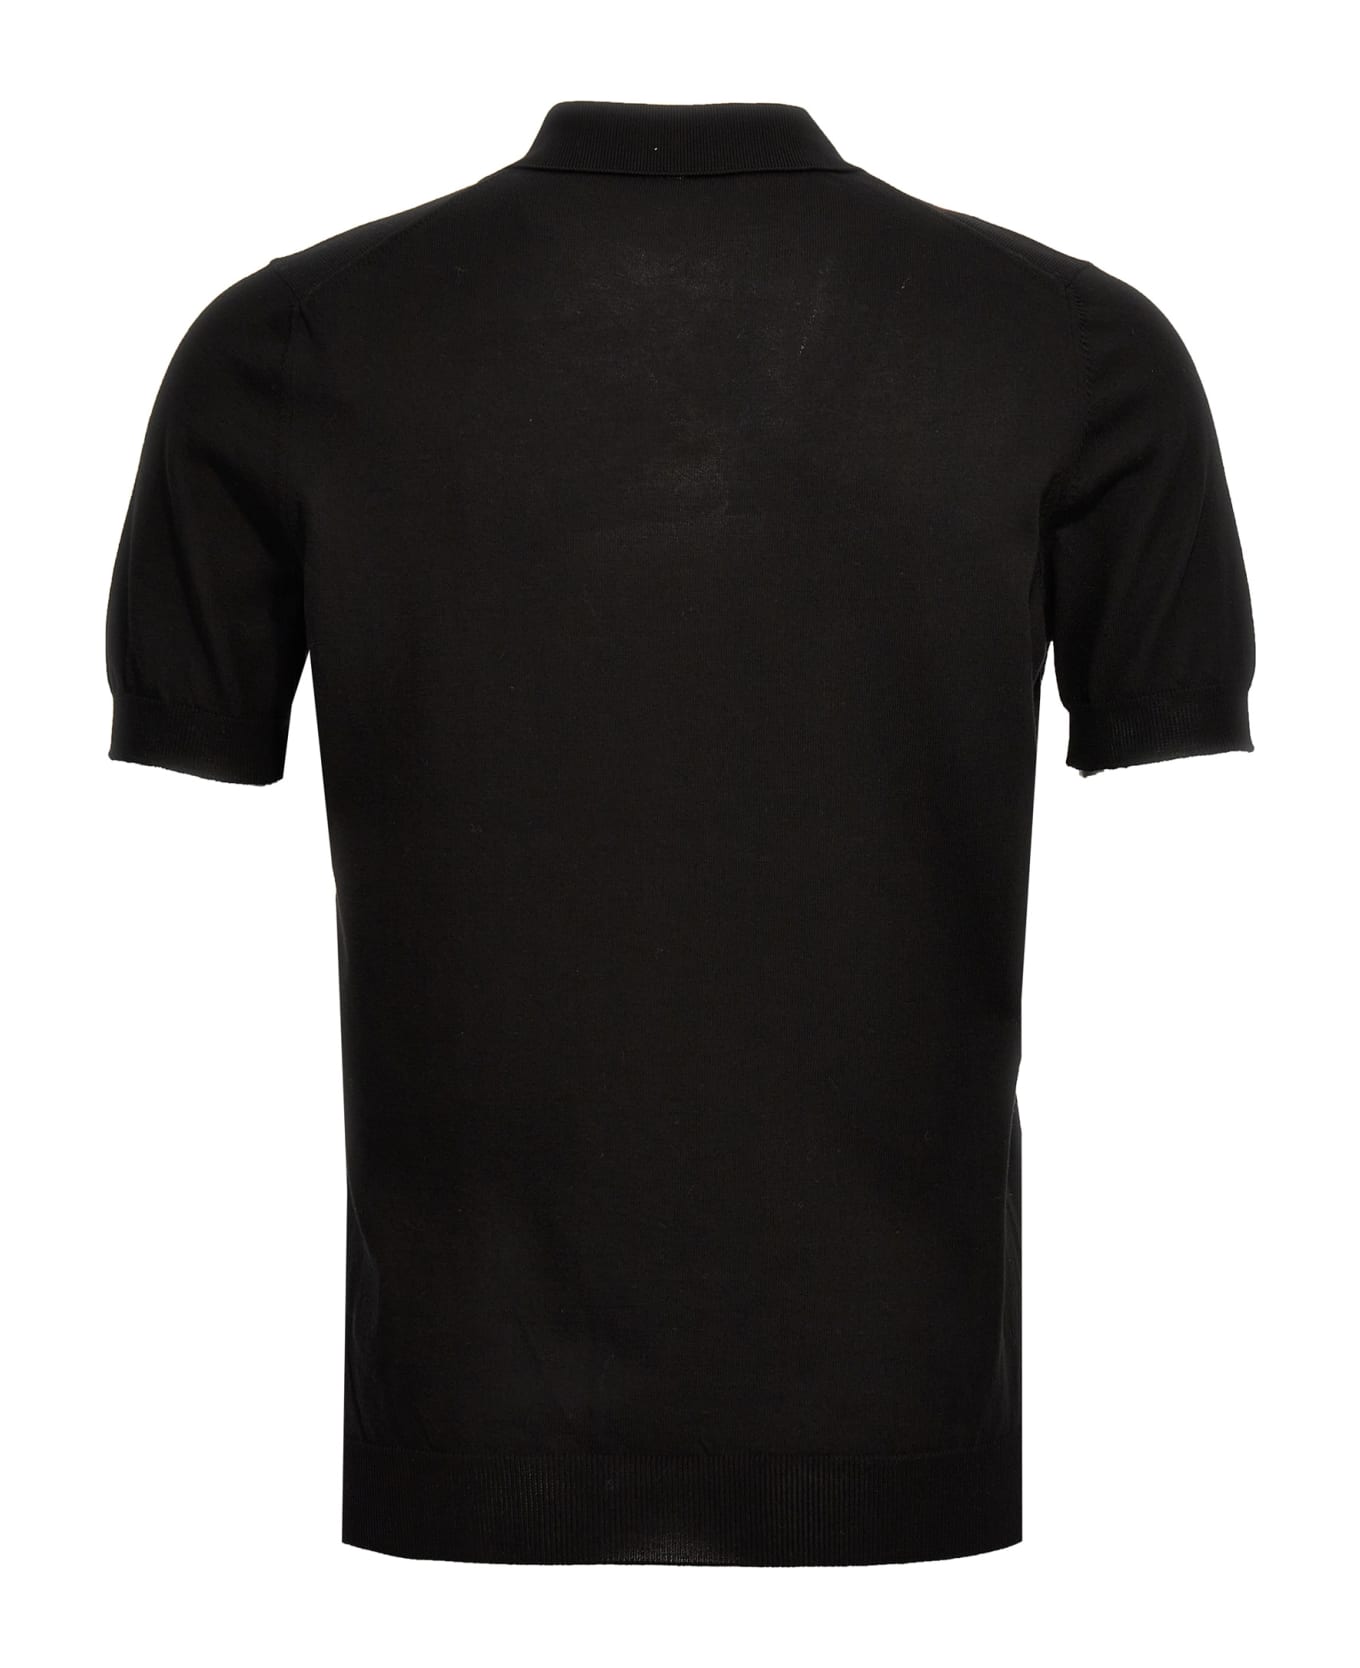 Tagliatore Knitted Polo Shirt - Black  